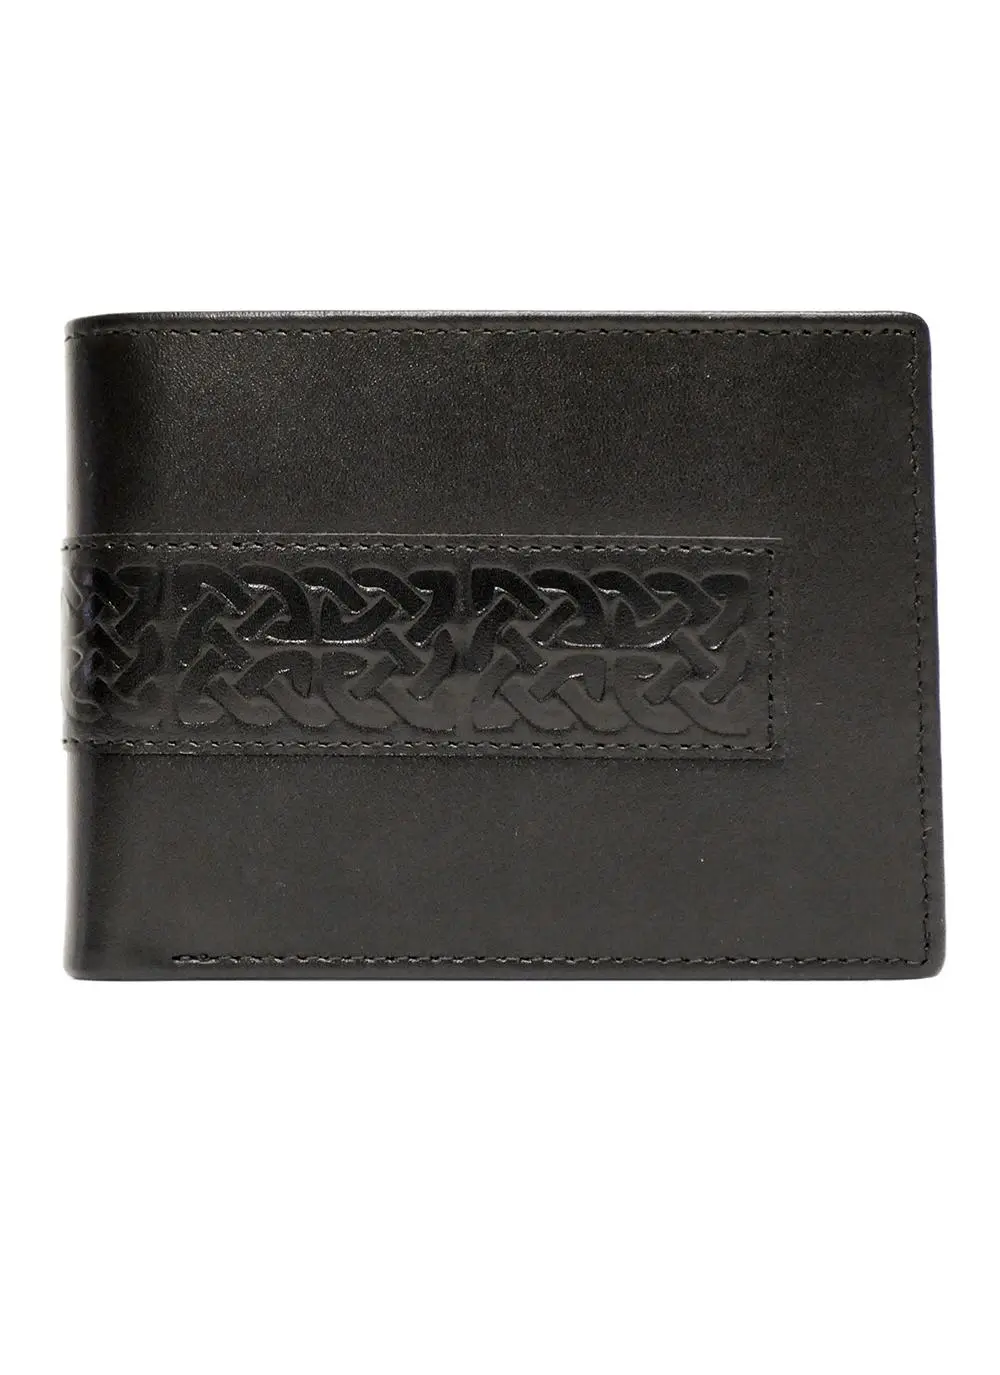 Black Leather Book of Kells Wallet | Blarney